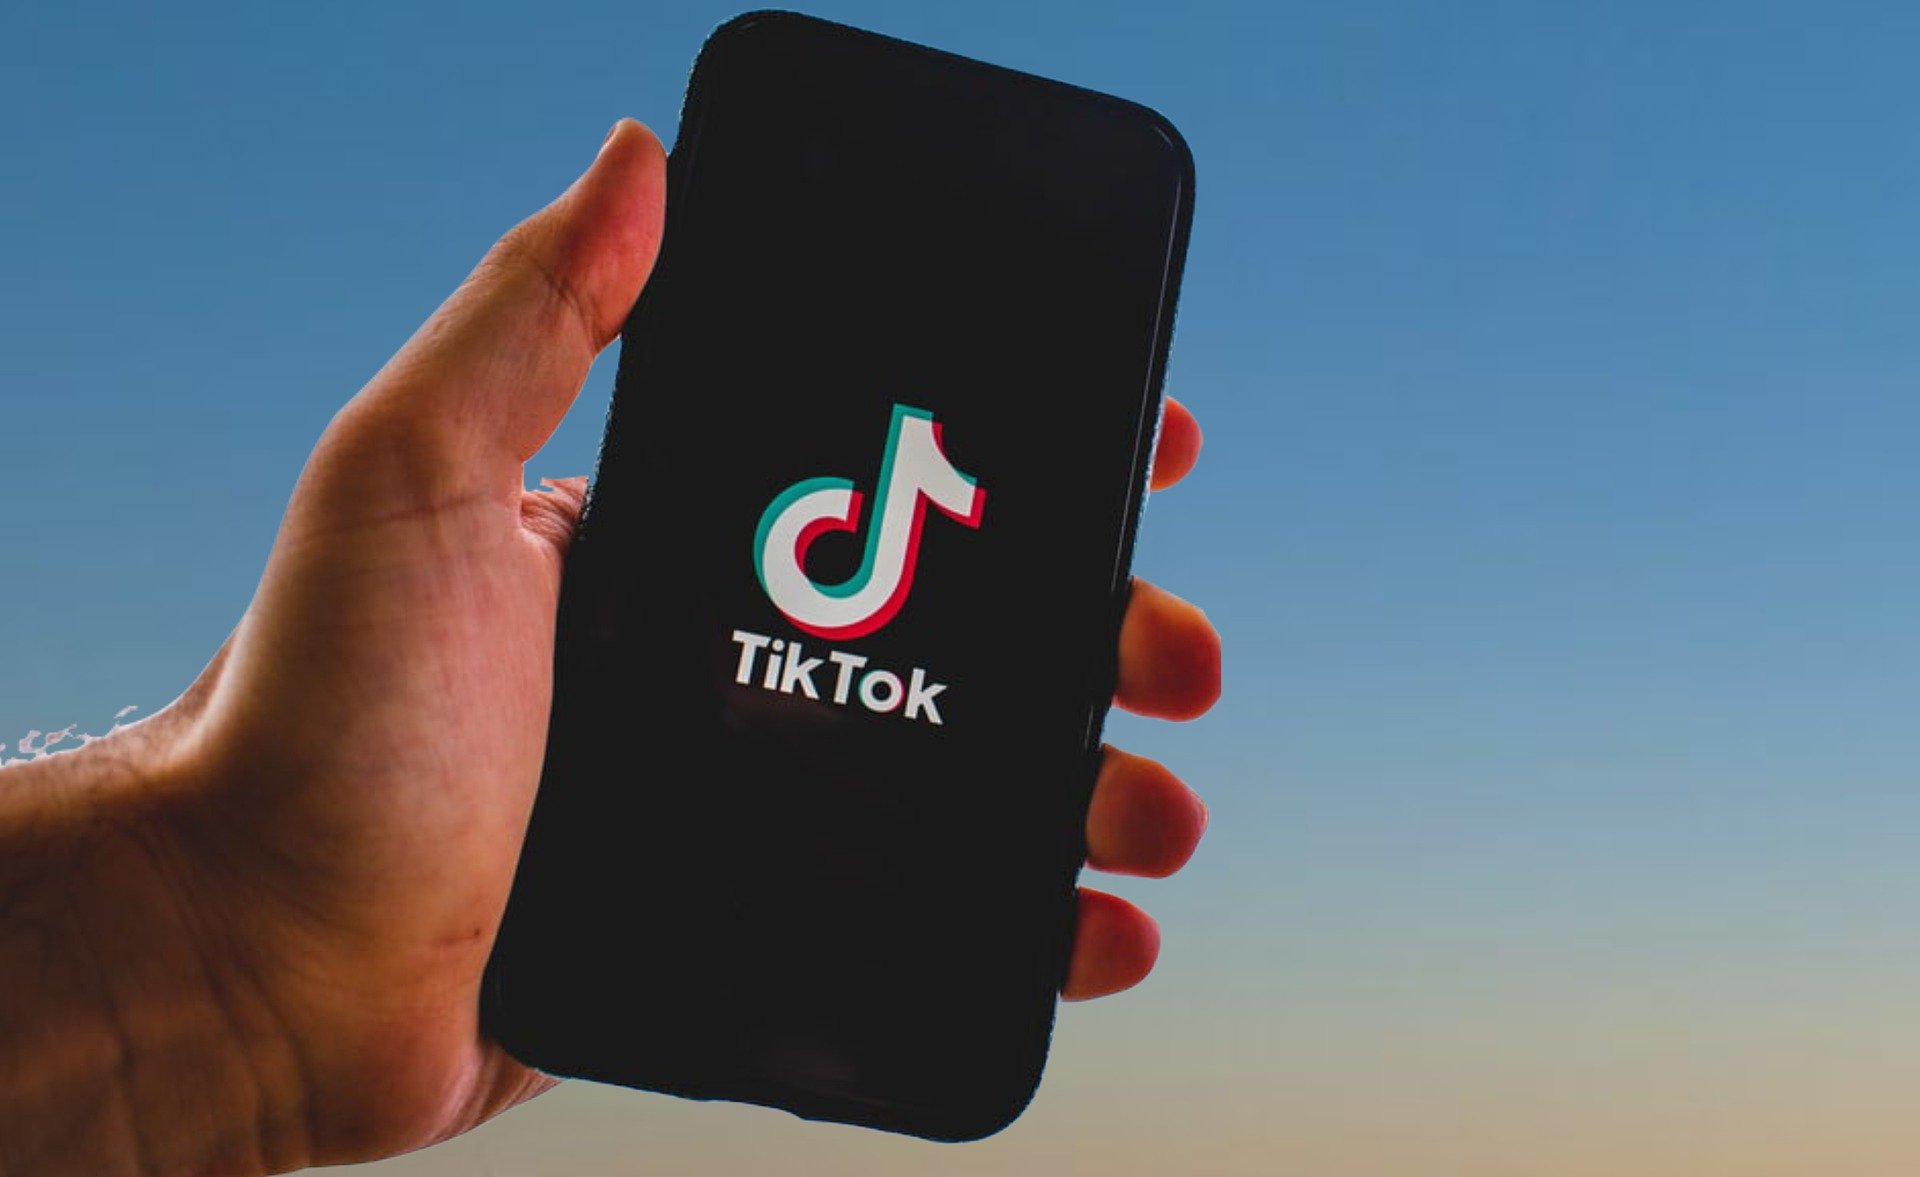 TikTok Works: How Entertainment on TikTok Improves Brand